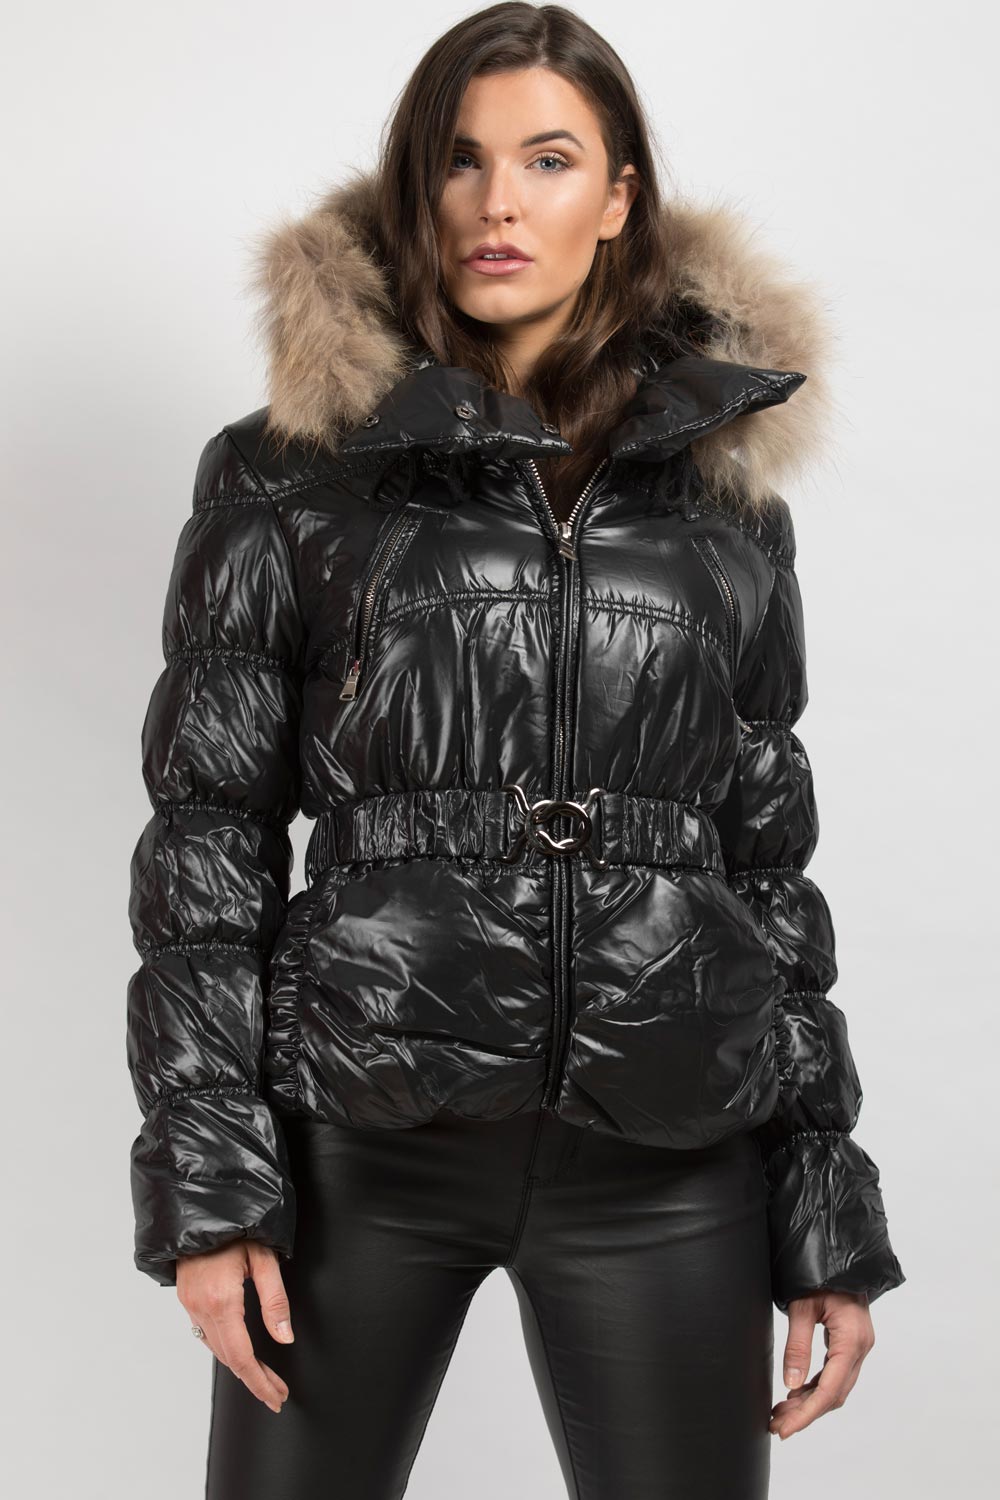 black coat with fur hood womens uk 